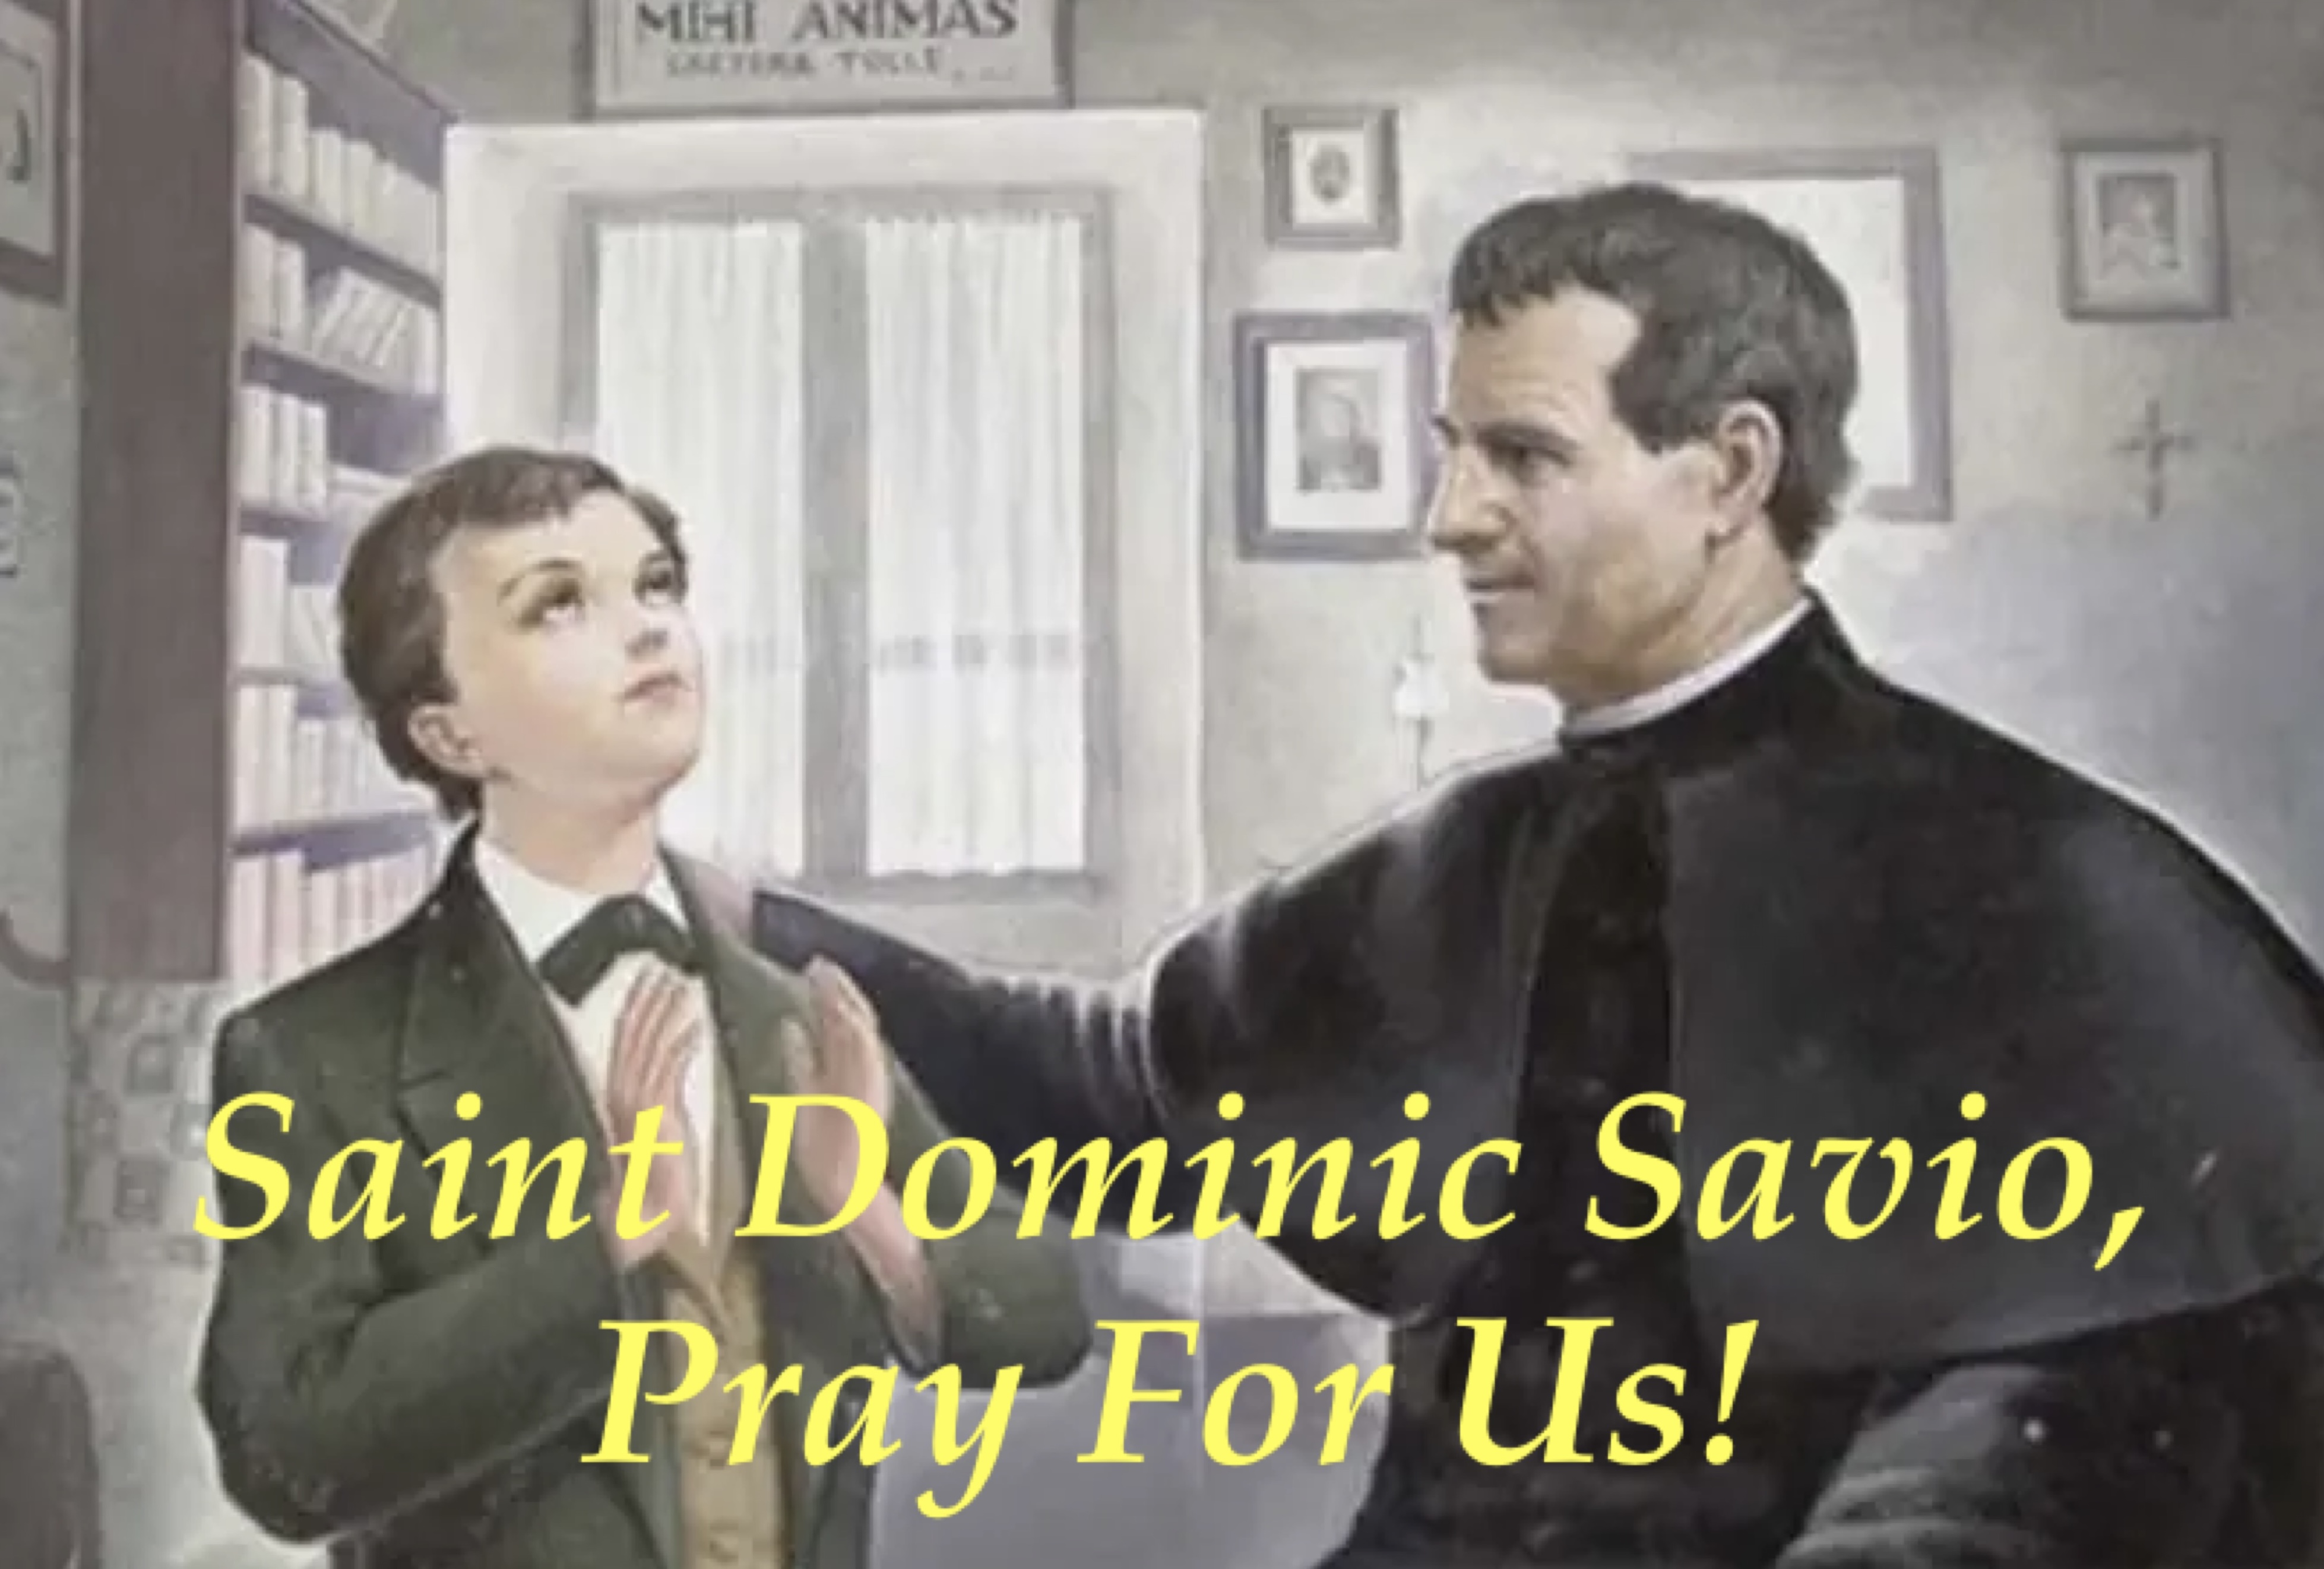 6th April - Saint Dominic Savio